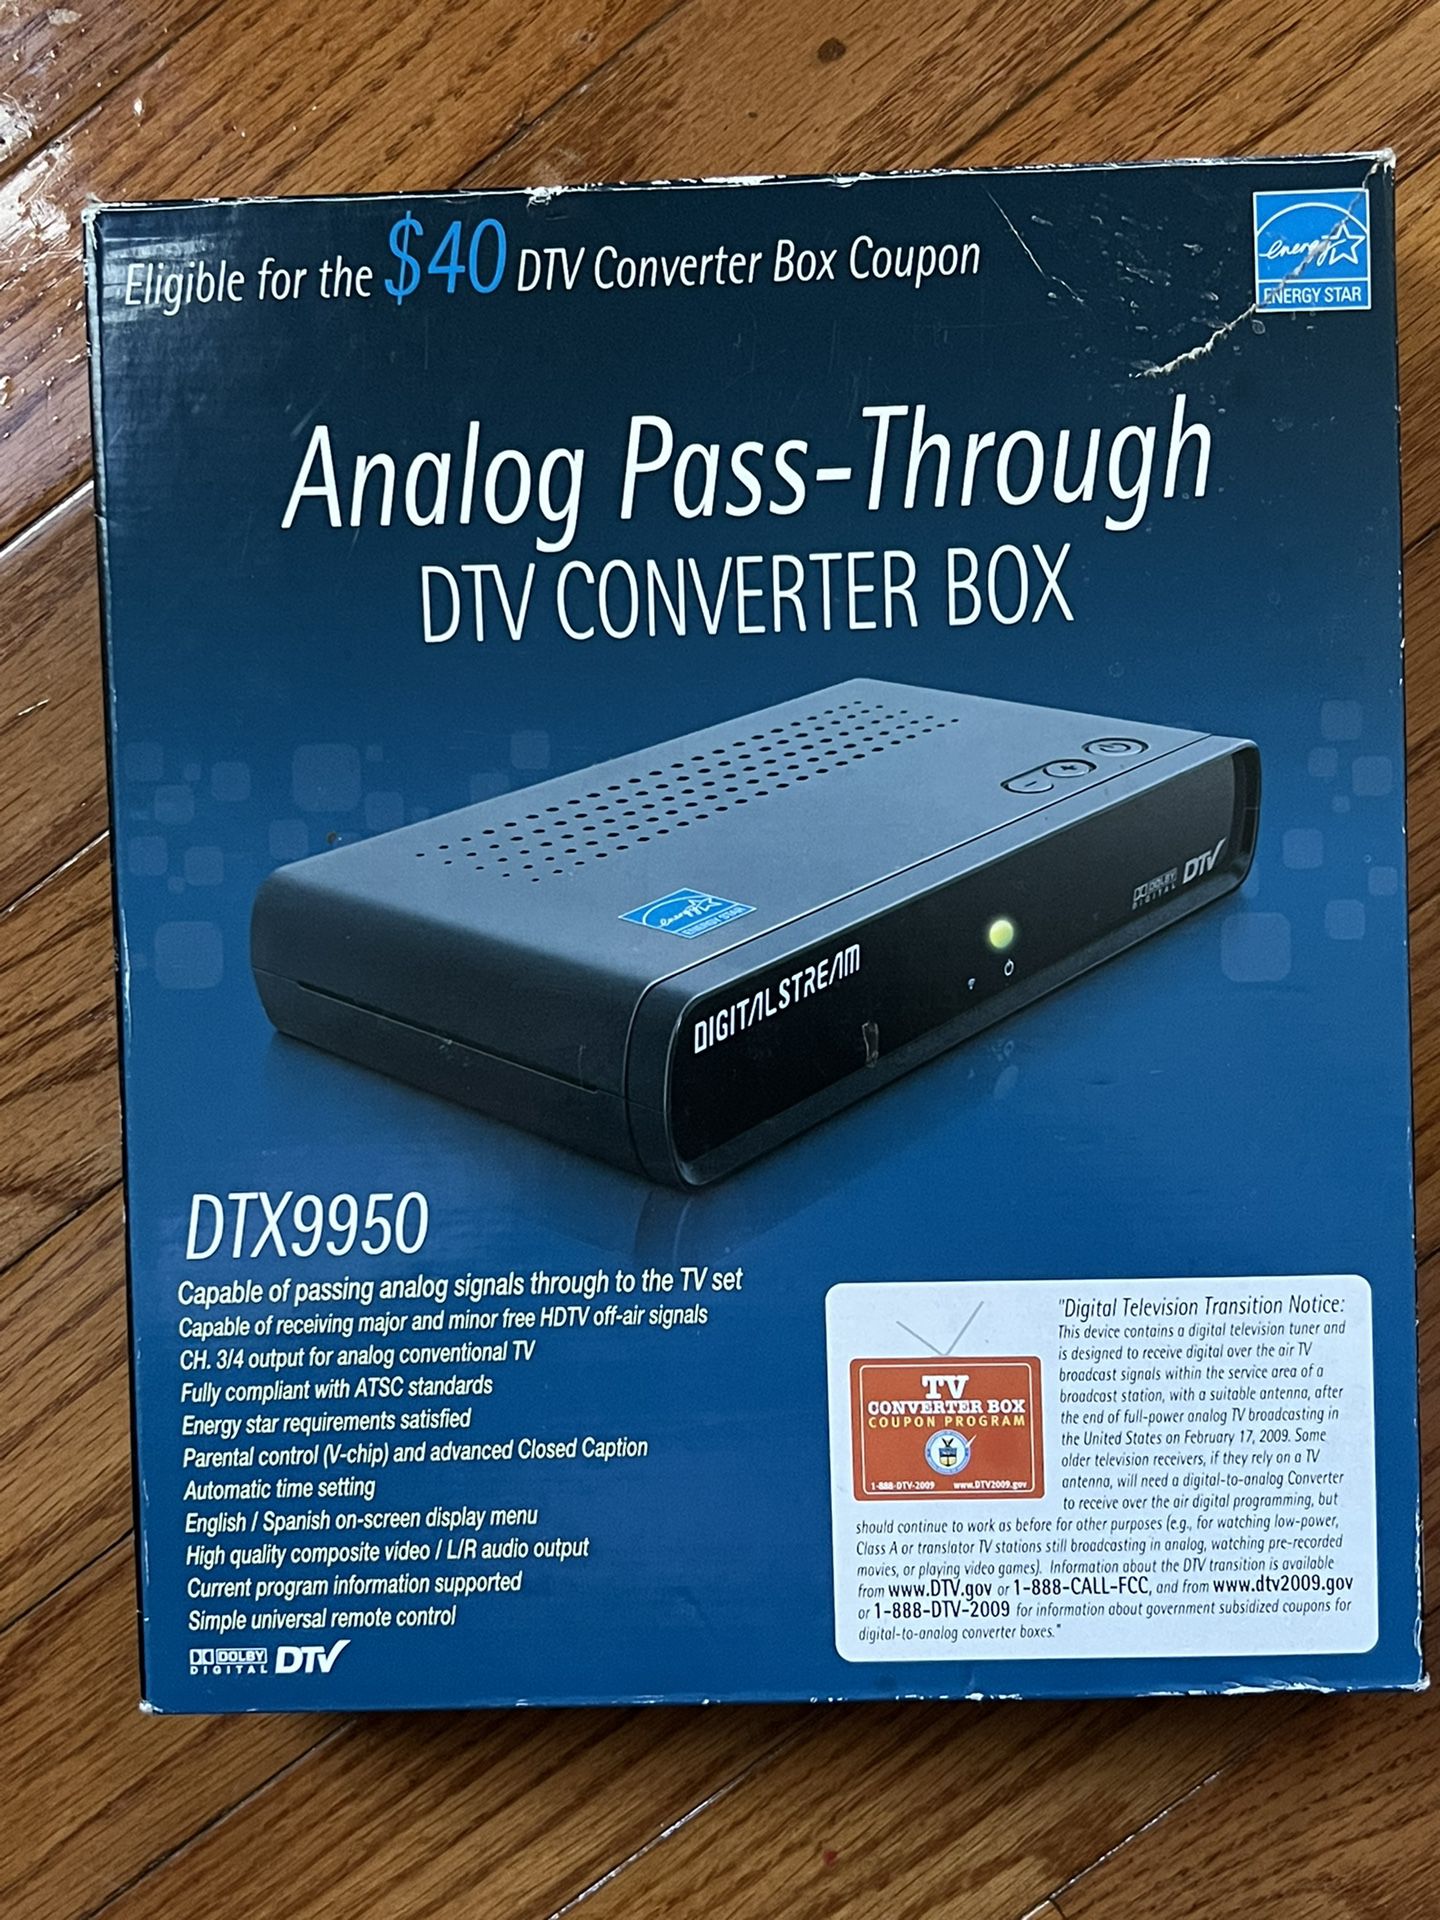 Analog Pass-through DTV Converter Box